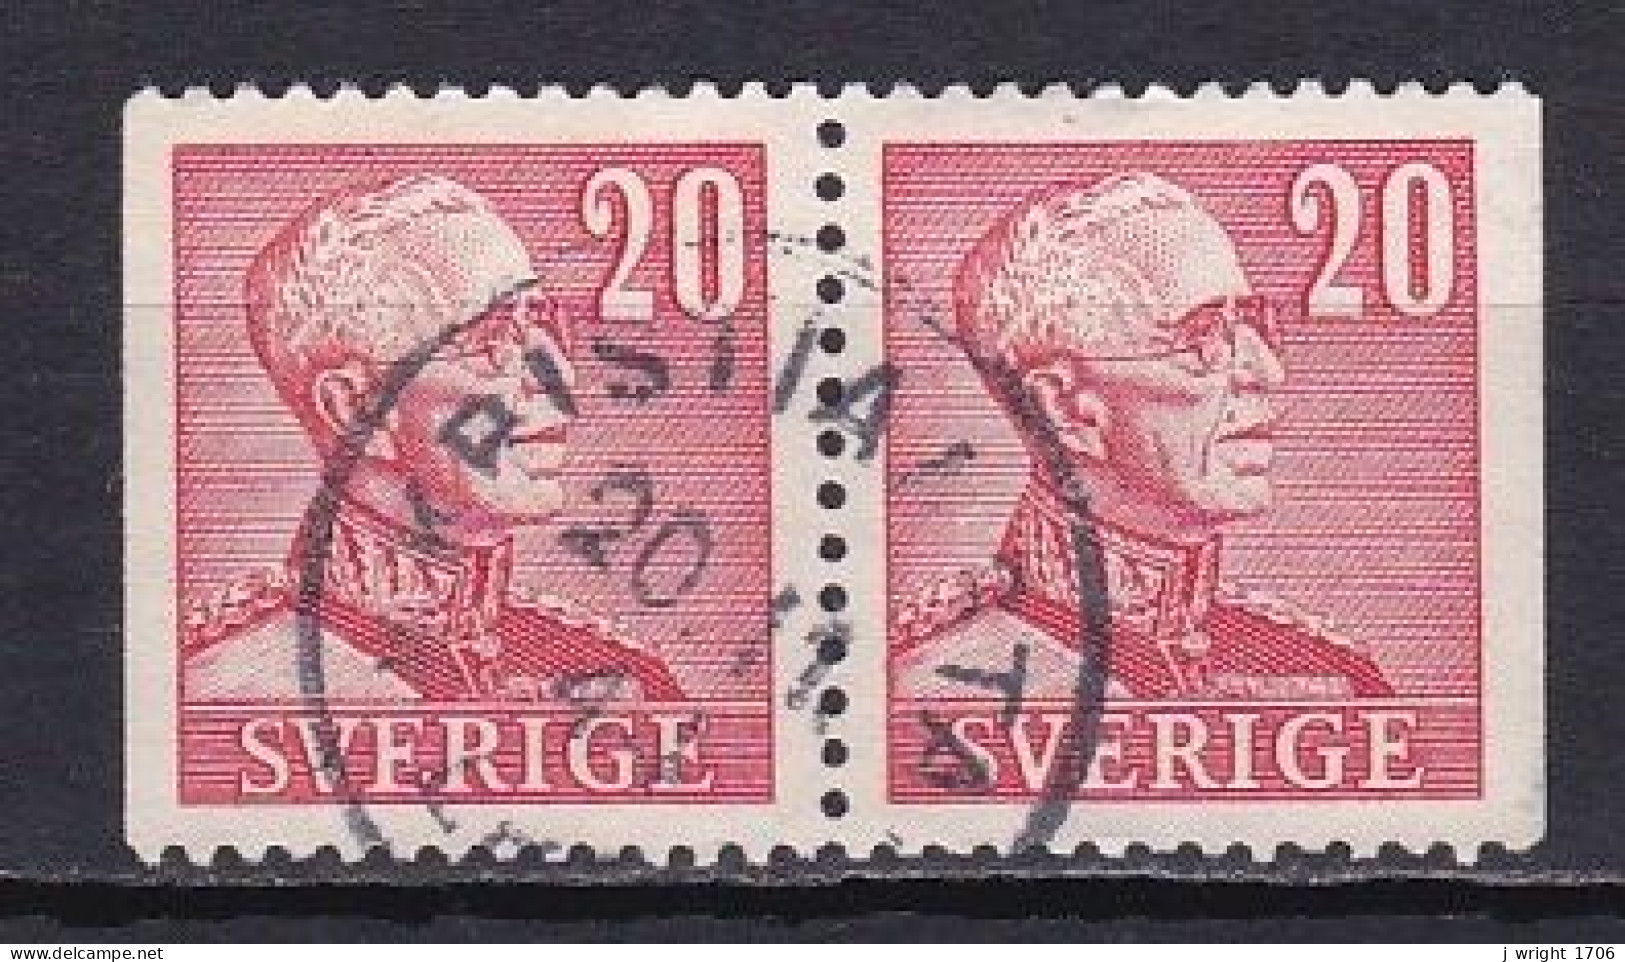 Sweden, 1942, King Gustaf V, 20ö/Large '20'/Joined Pair, USED - Used Stamps